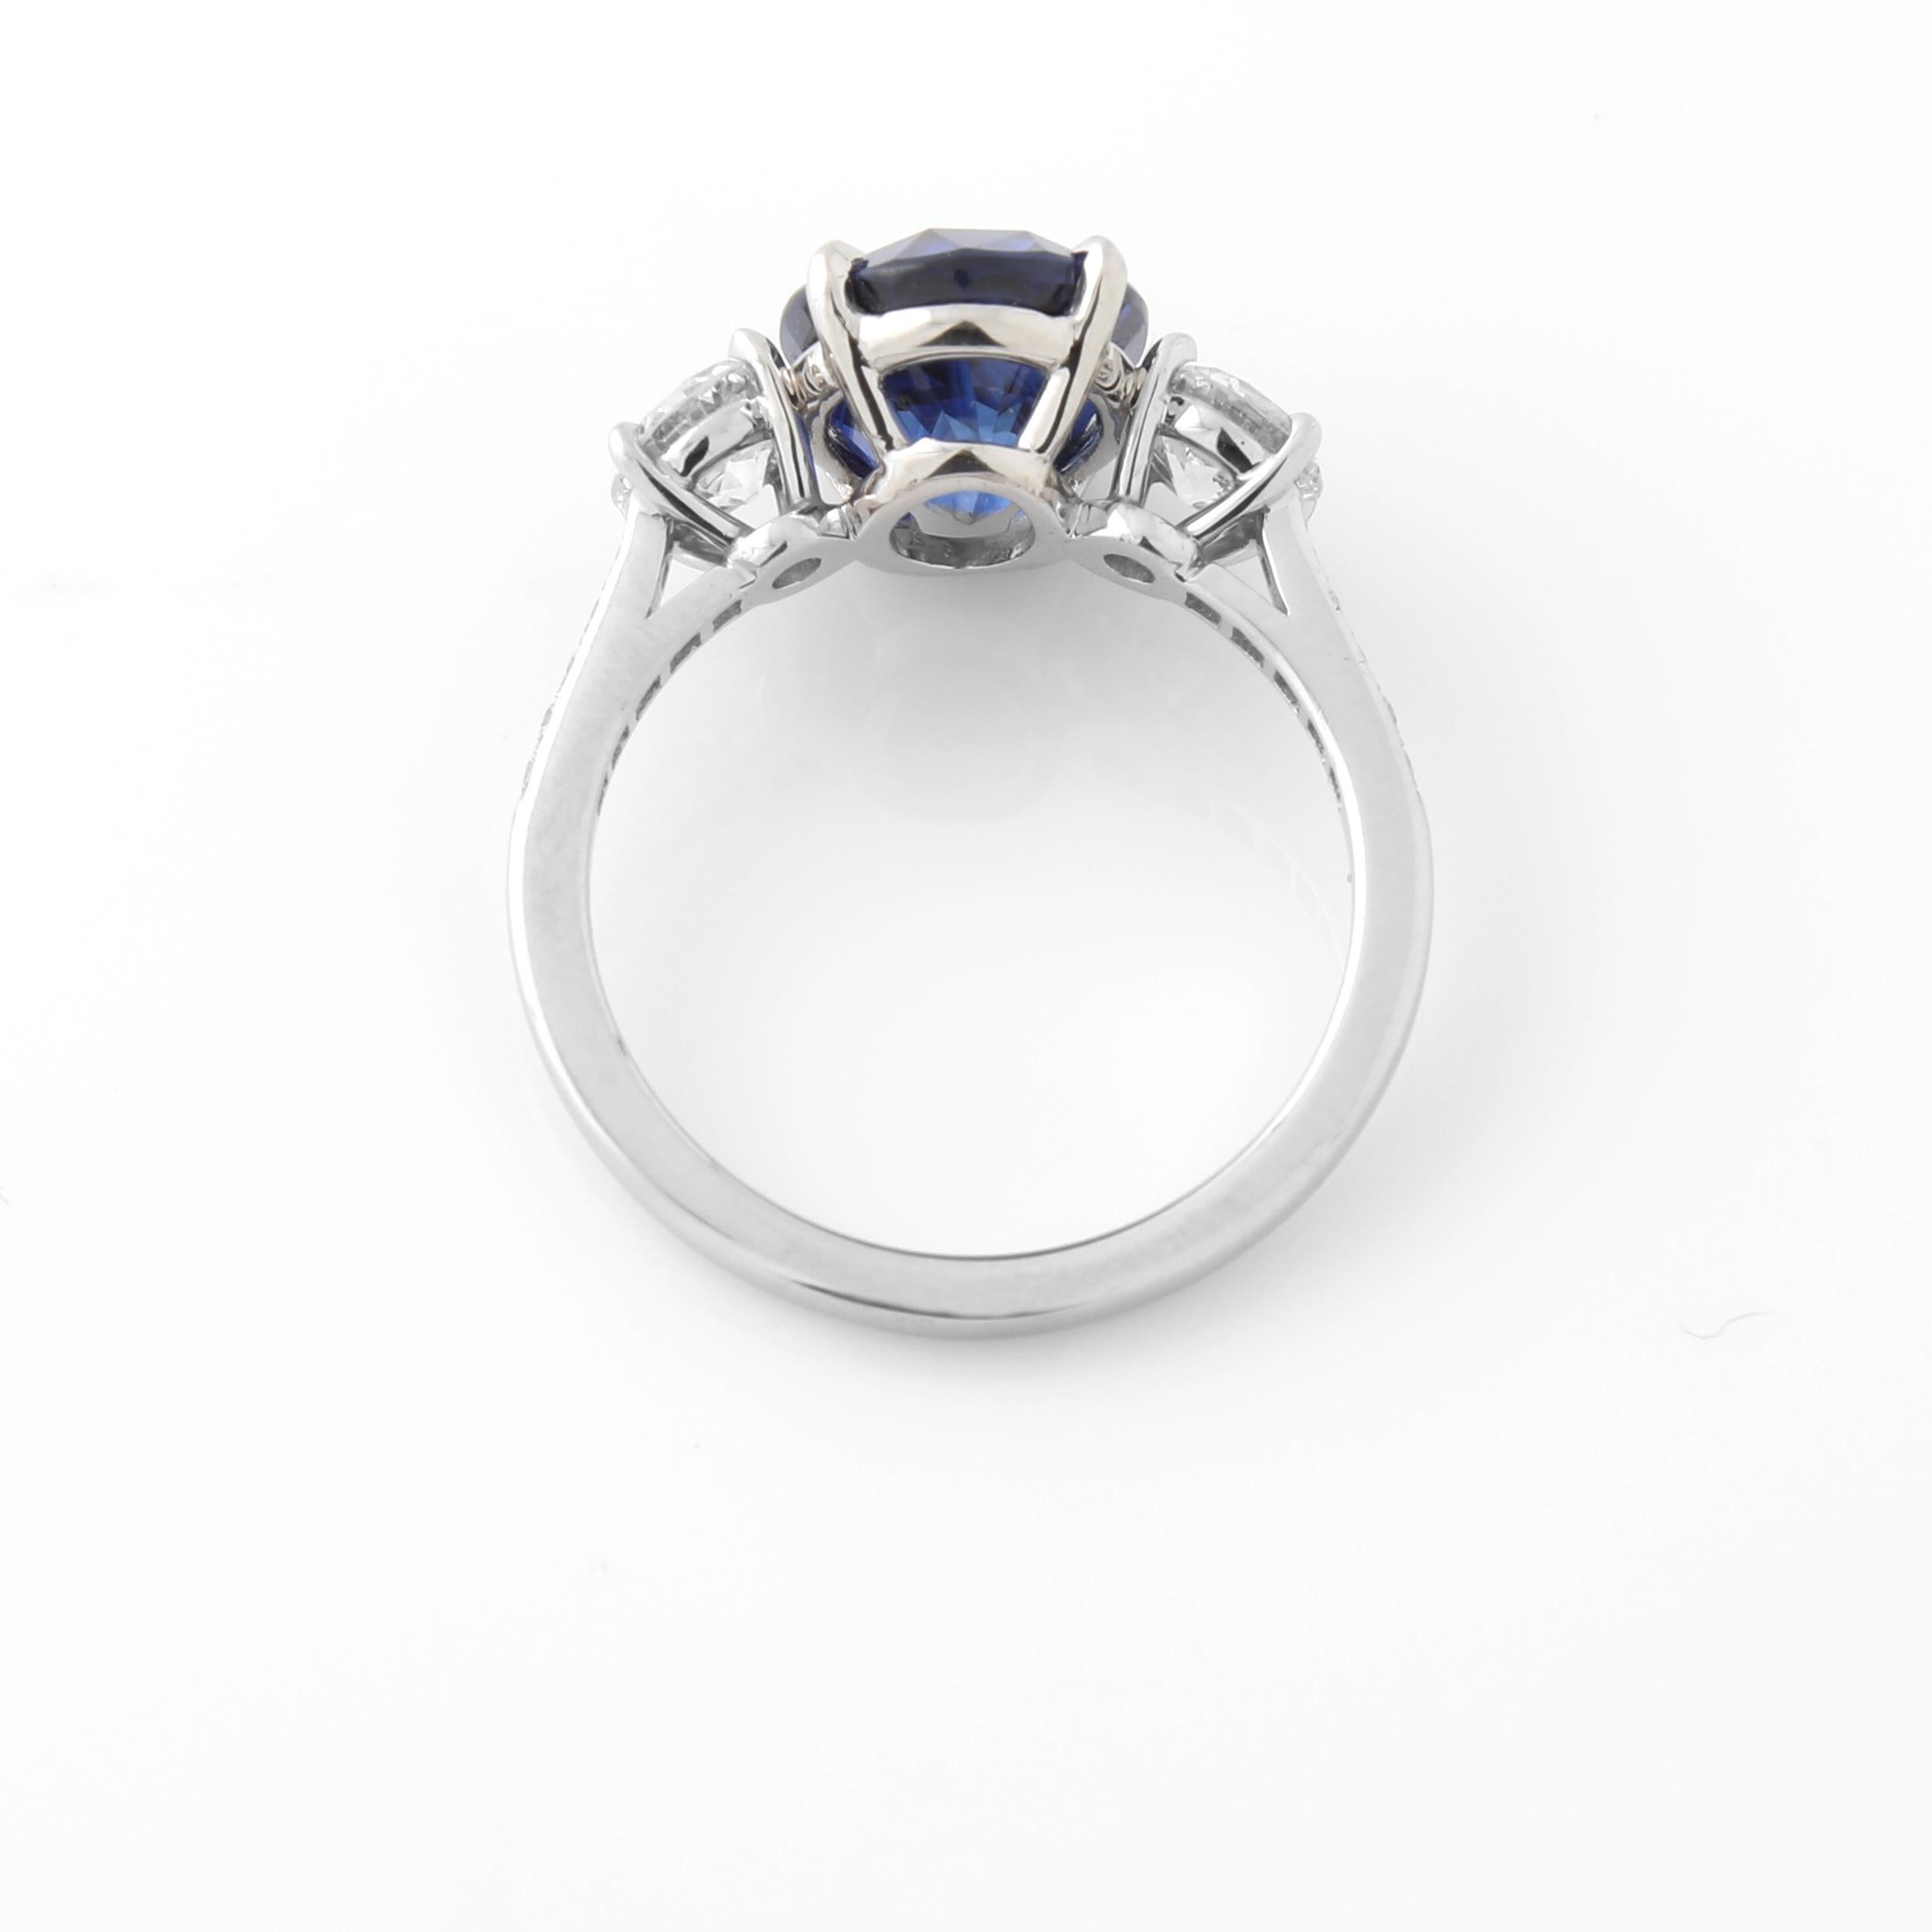 Oval Cut Certified 4.04 Carat Sri Lankan (Ceylon) Sapphire and Diamond Ring